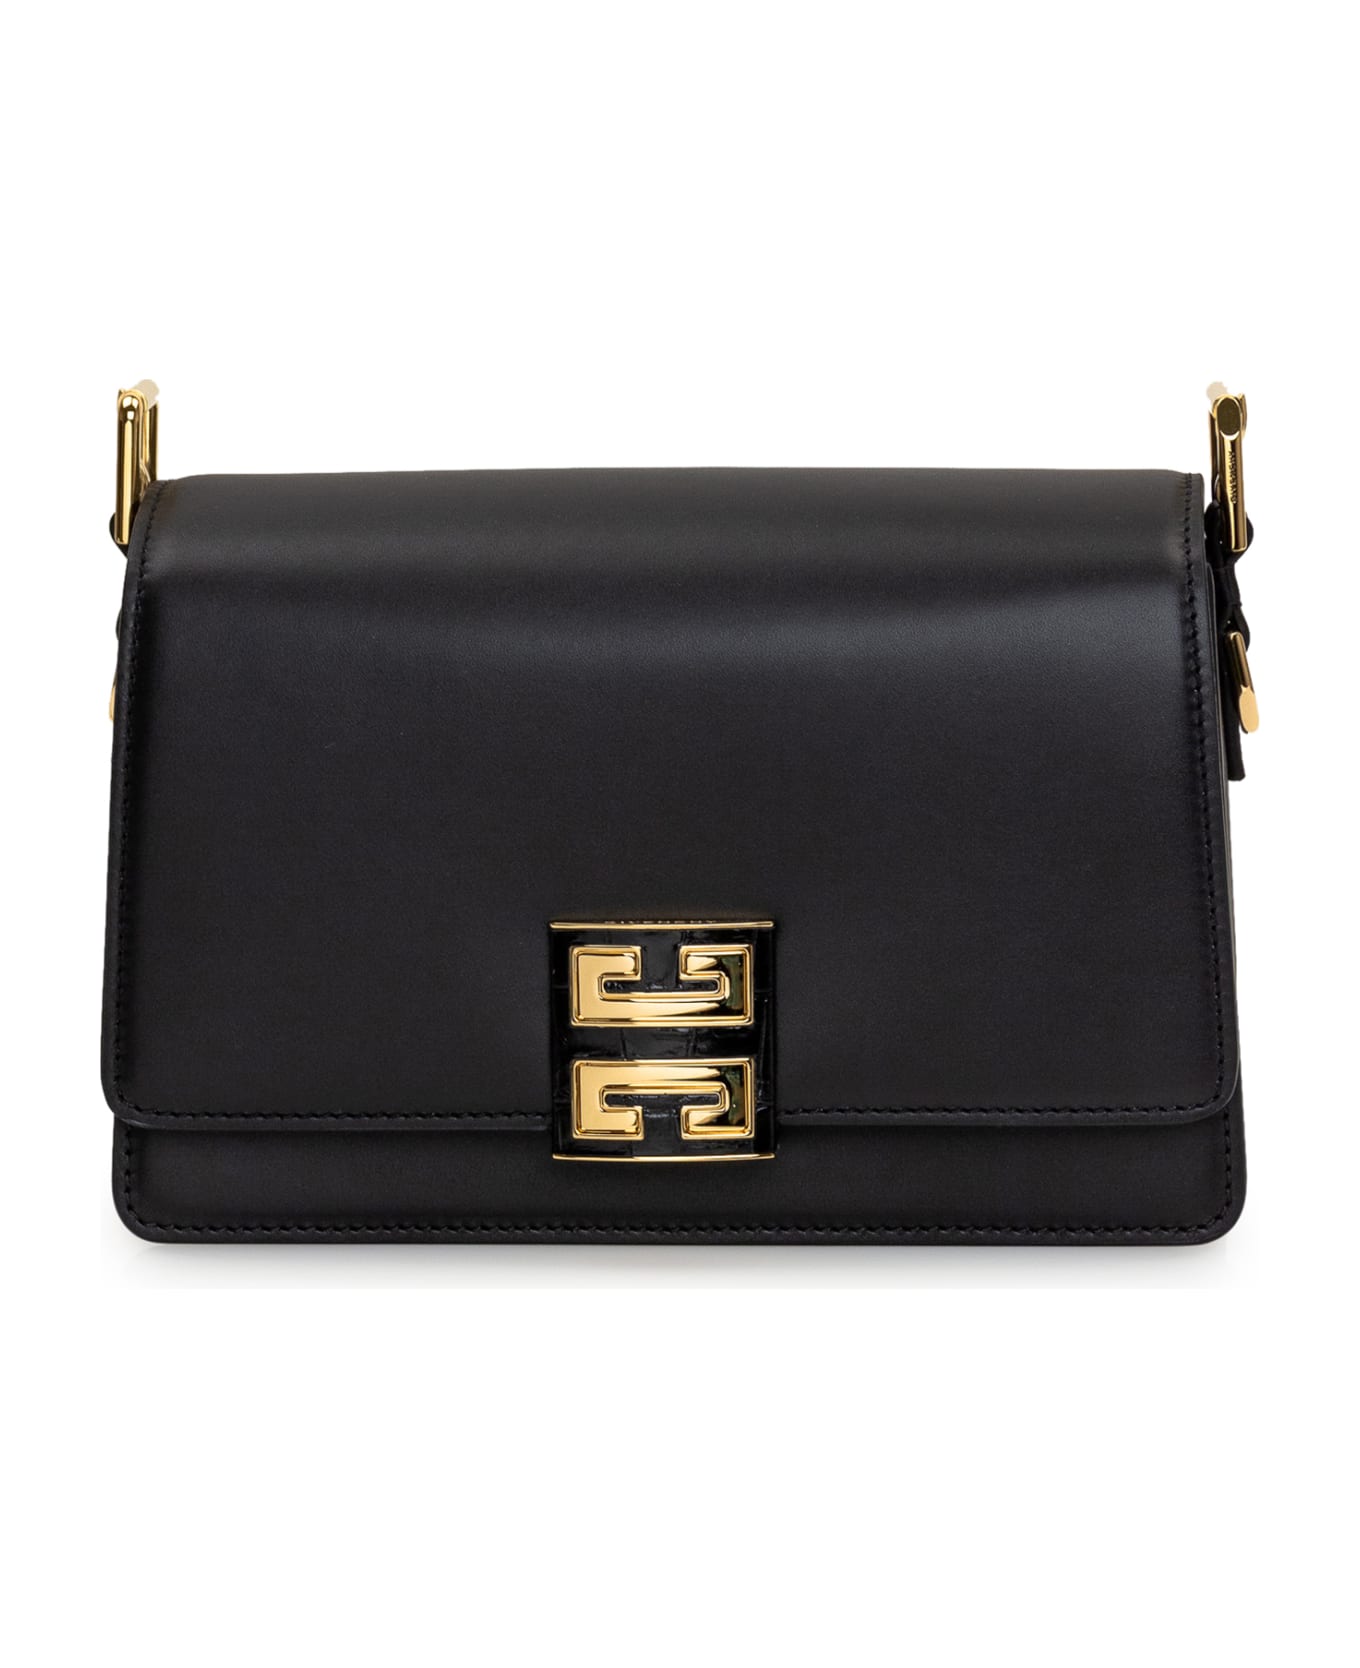 Givenchy 4g Crossbody Medium Bag In Black Box Leather - Black